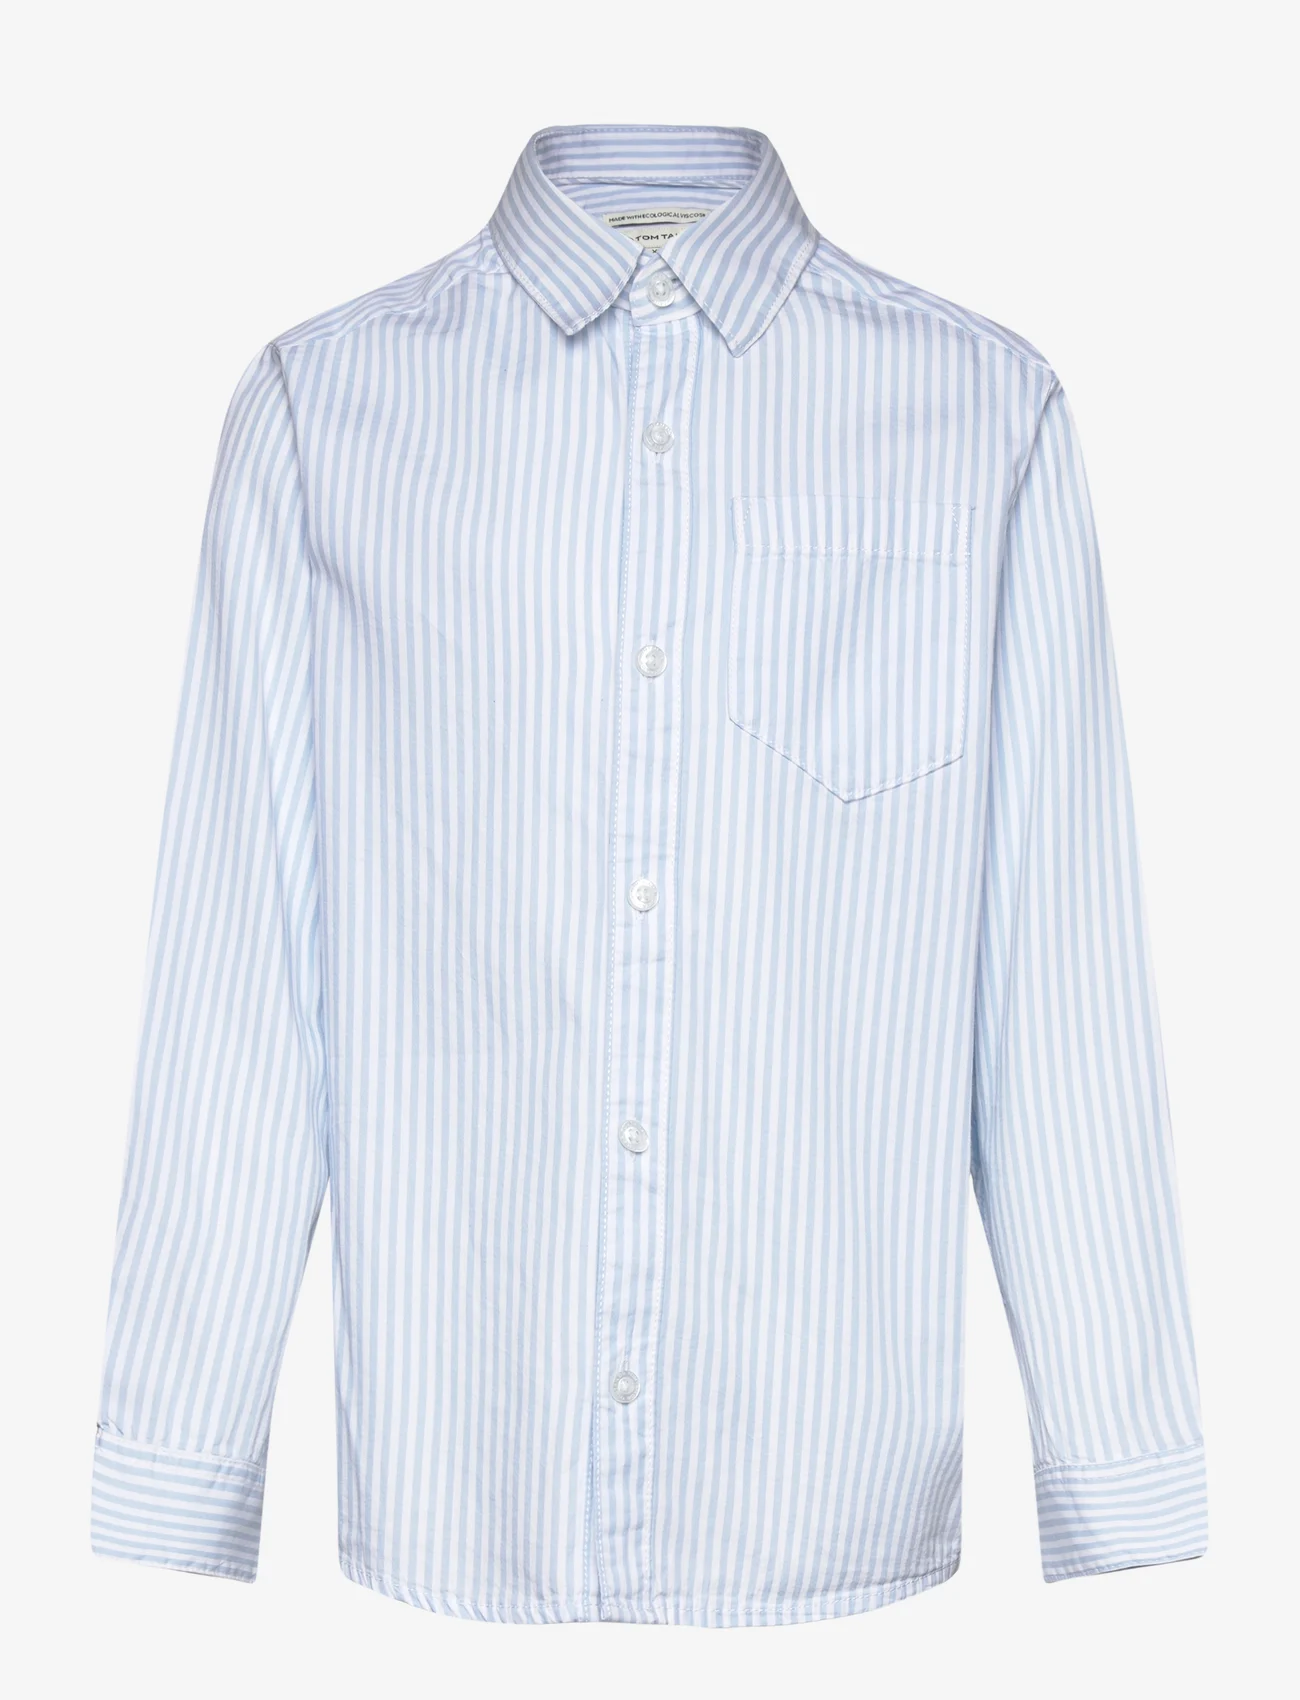 Tom Tailor - striped shirt - long-sleeved shirts - blue white stripe - 0